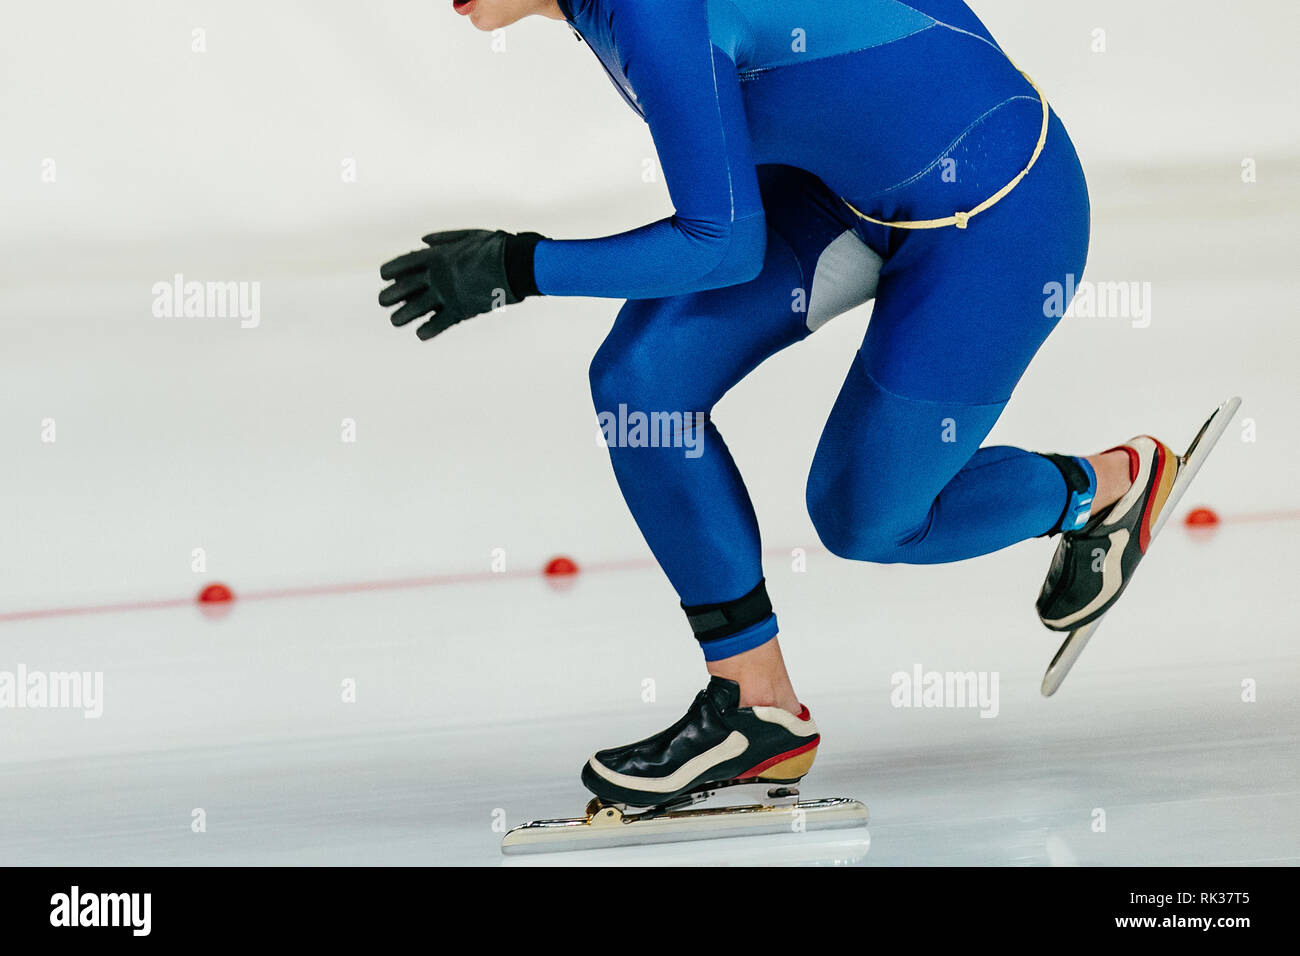 athlete speed skater in blue skin suit running on speed skating Stock Photo